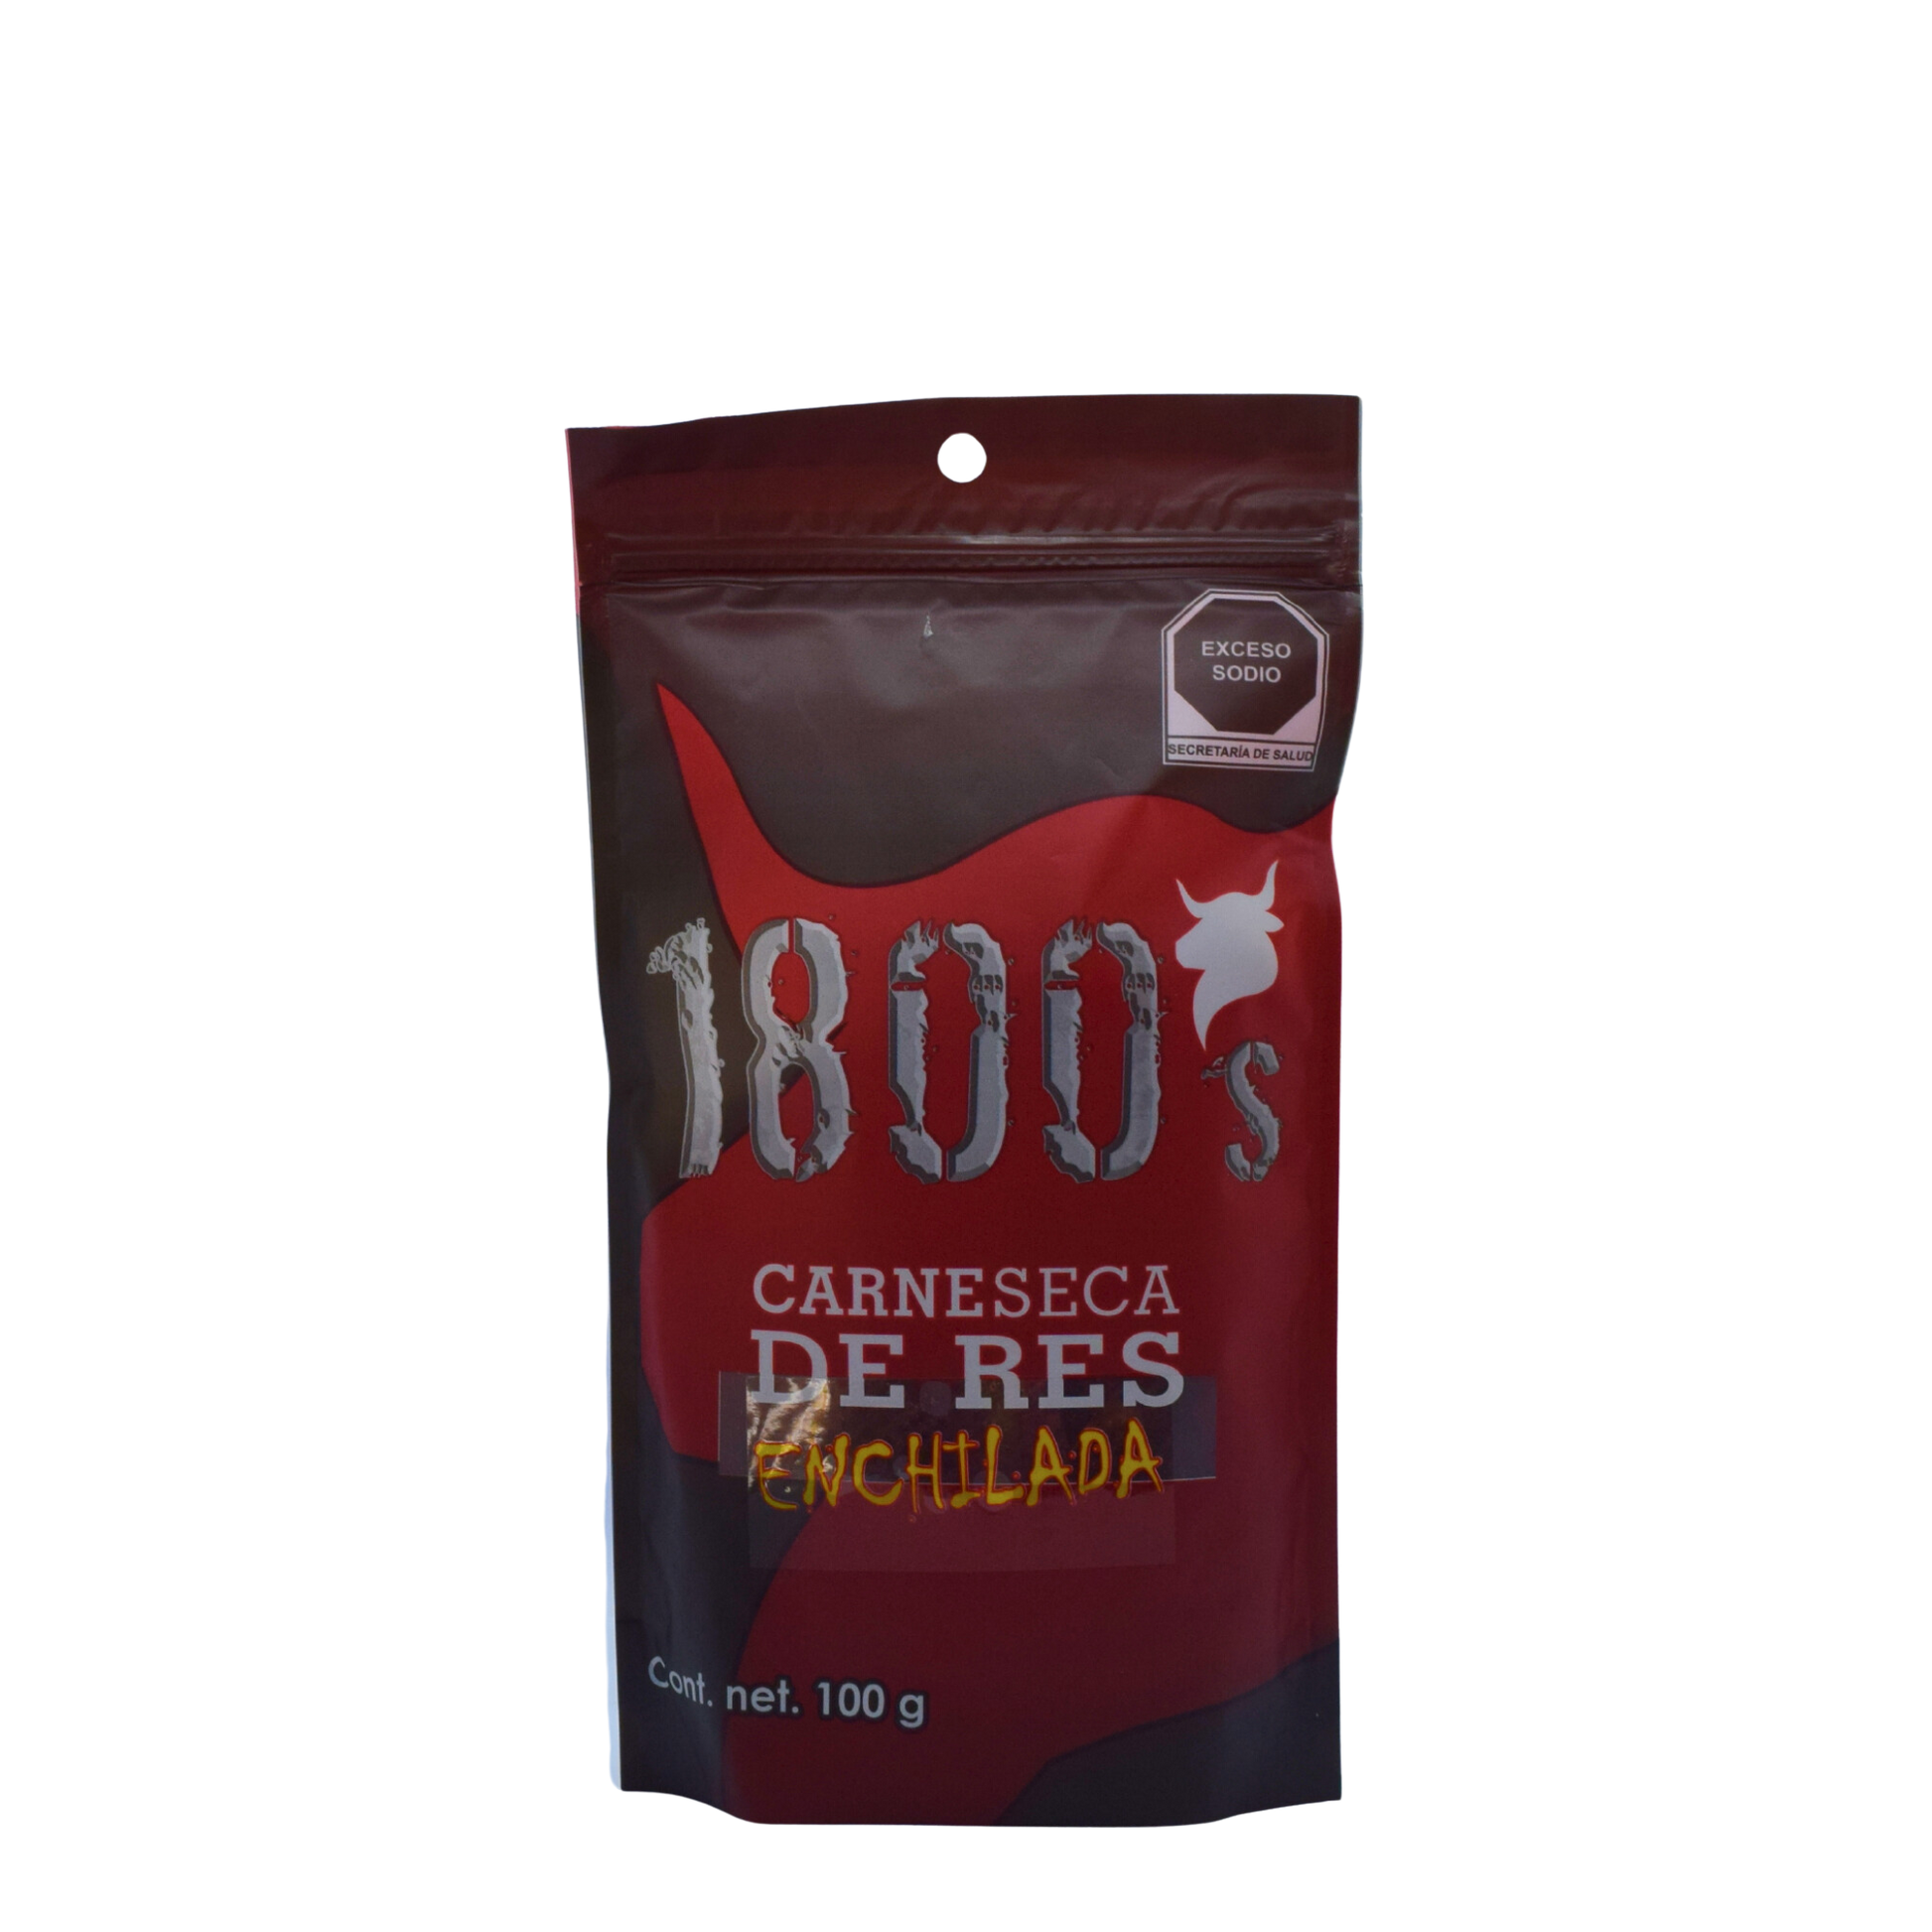 Carne seca 1800 - 100gr enchilada